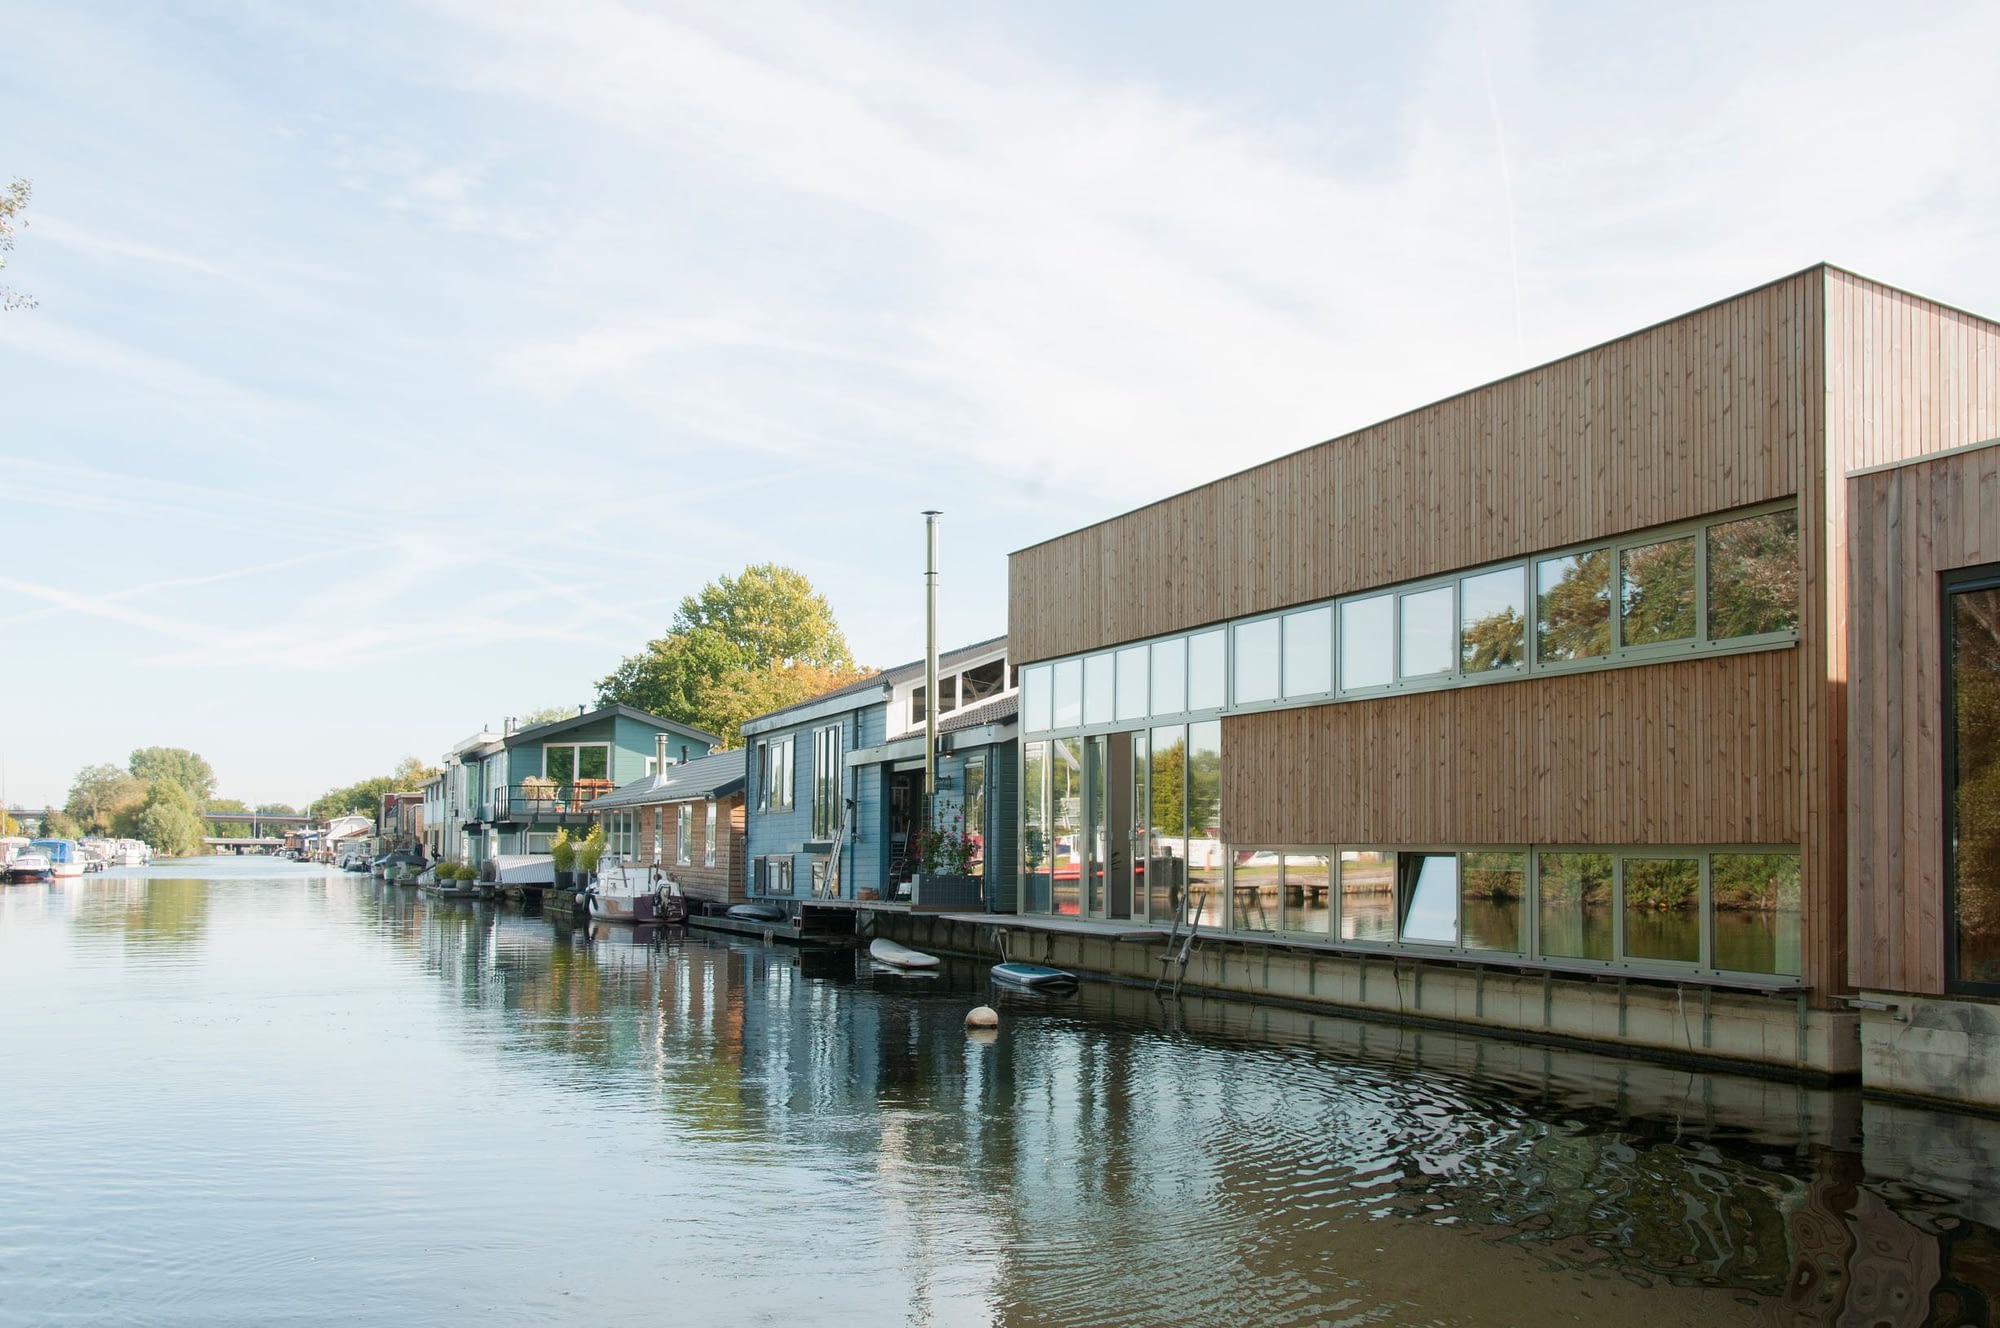 Studio Brandvries | woonboot gordelpad in rotterdam door architectenbureau rotterdam